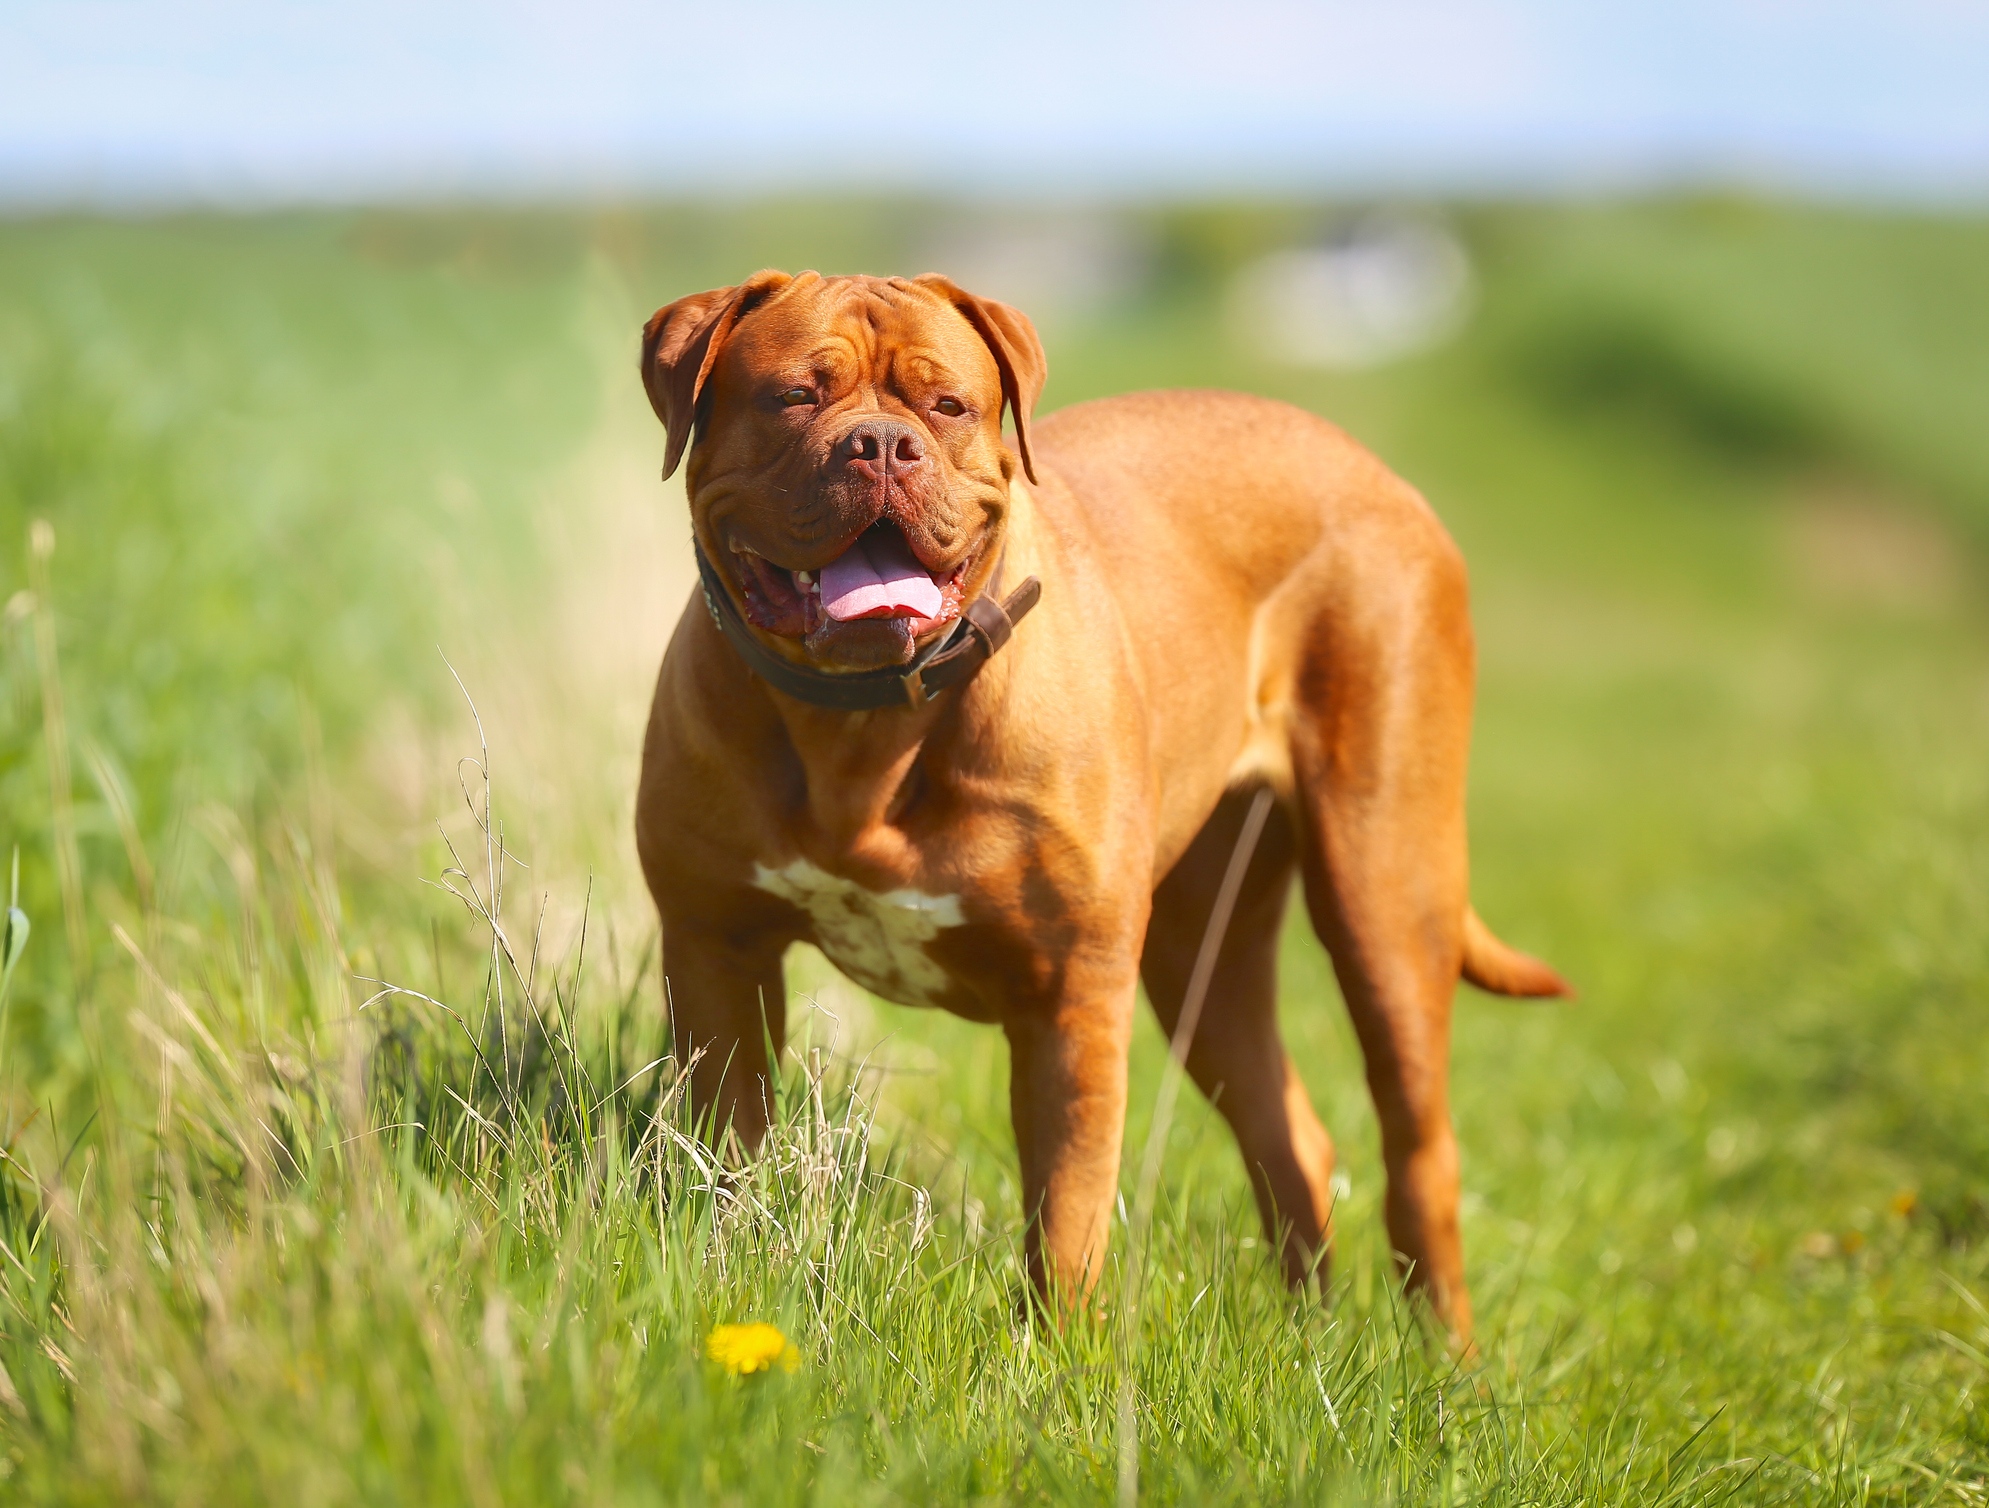 Dogue de bordeaux brown dog standing in grass field